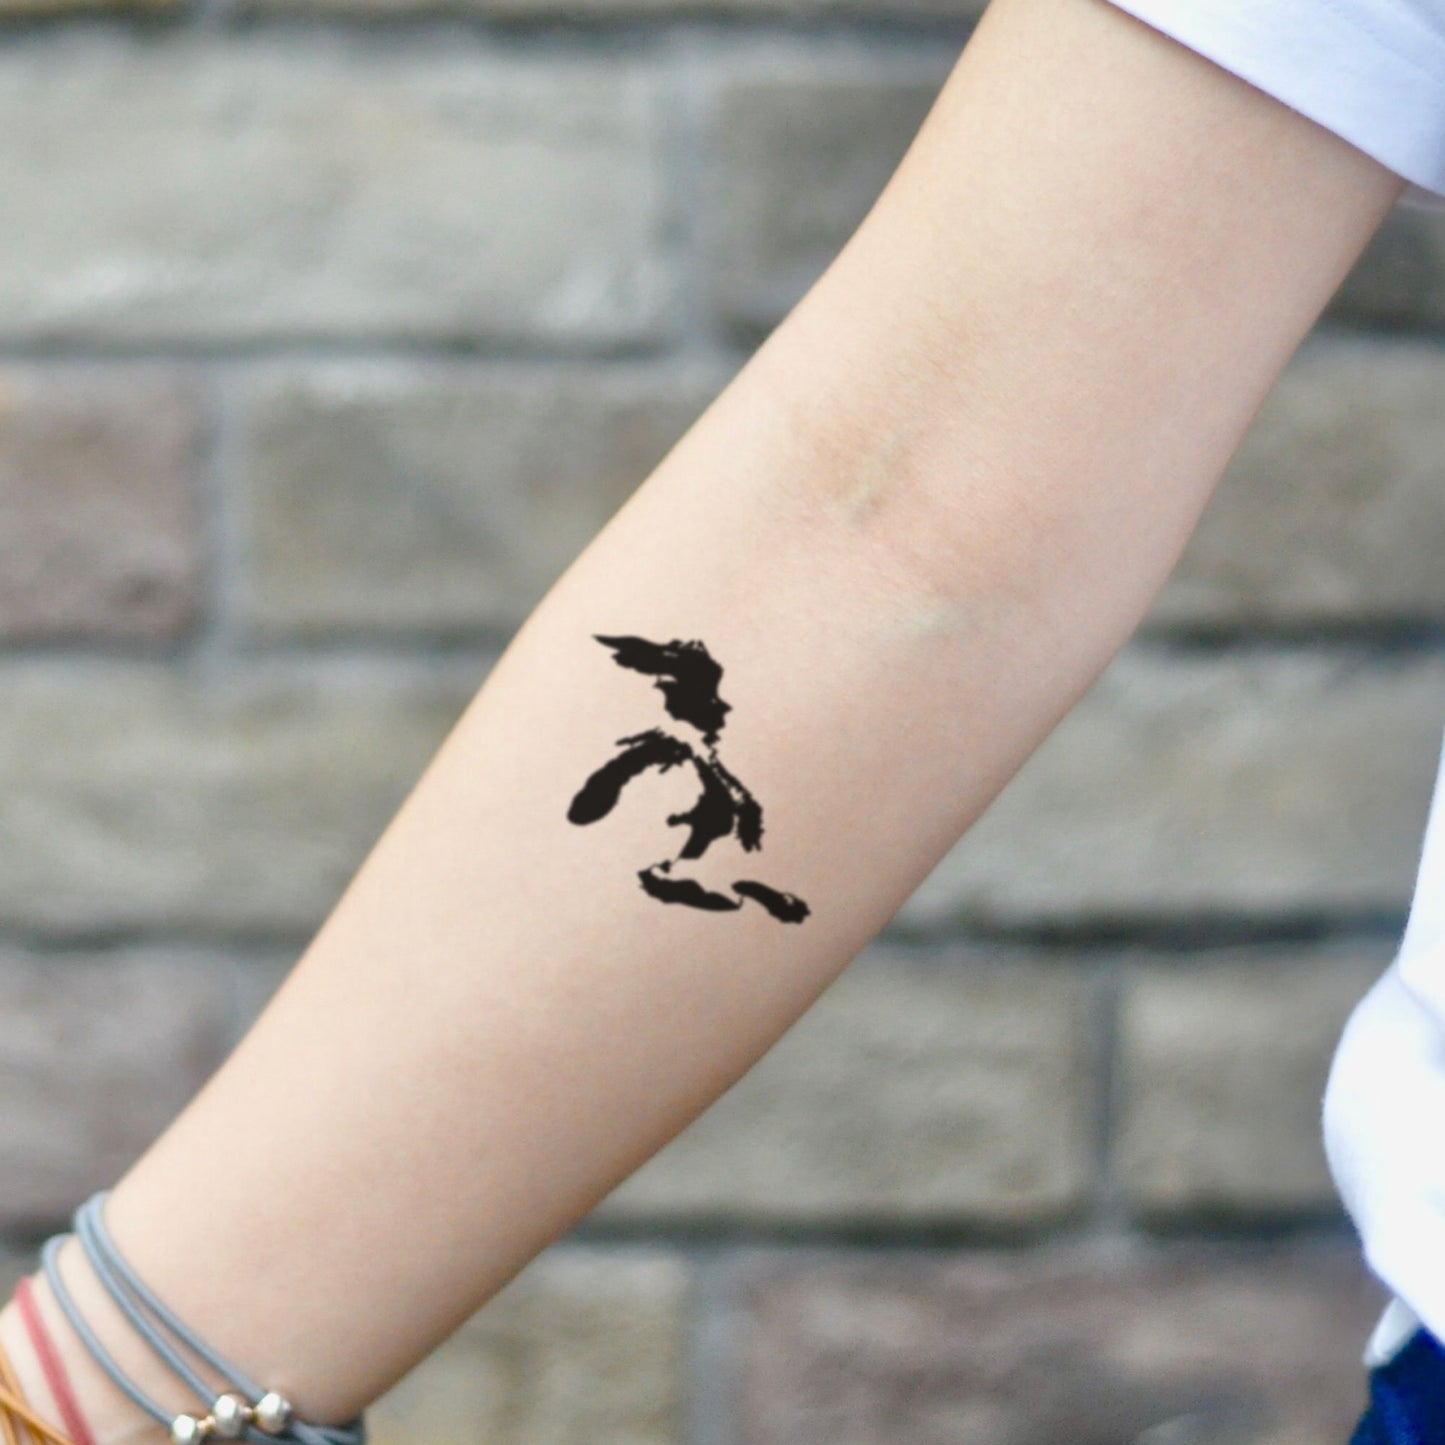 fake small great lakes minimalist temporary tattoo sticker design idea on inner arm